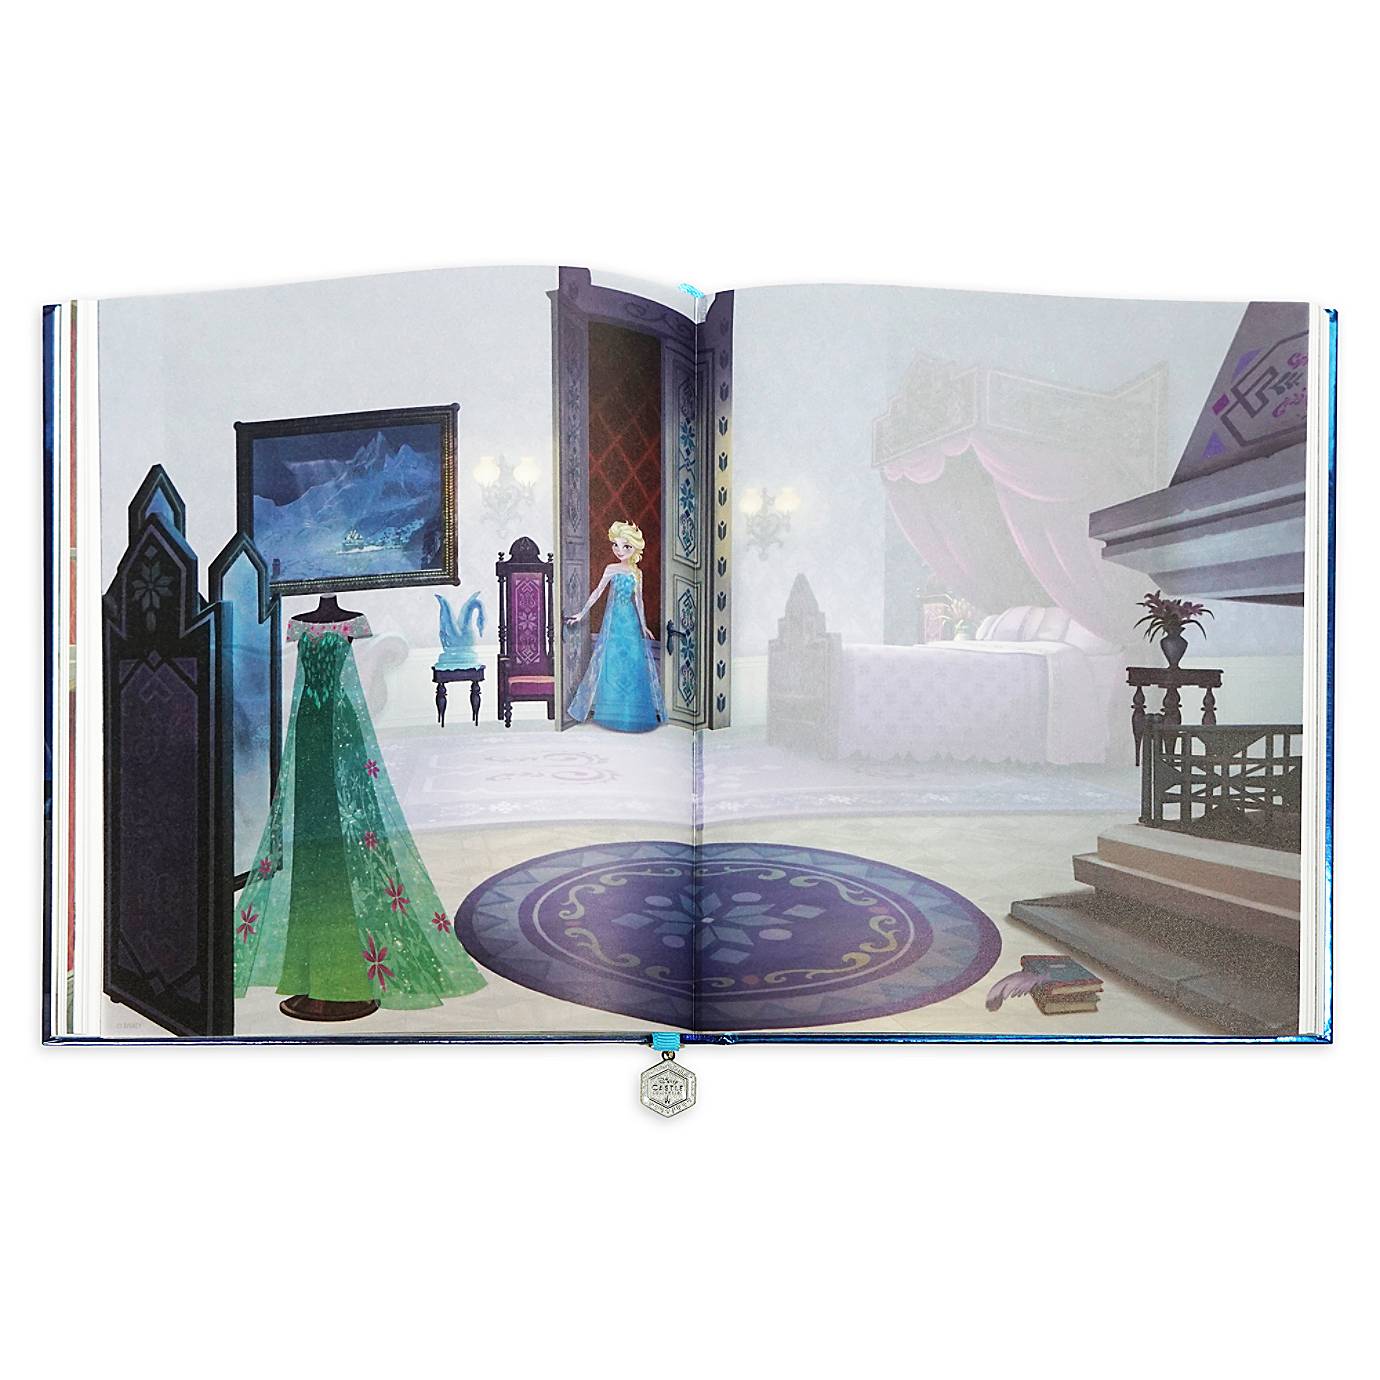 Disney Castle Collection Frozen Castle Limited Journal New